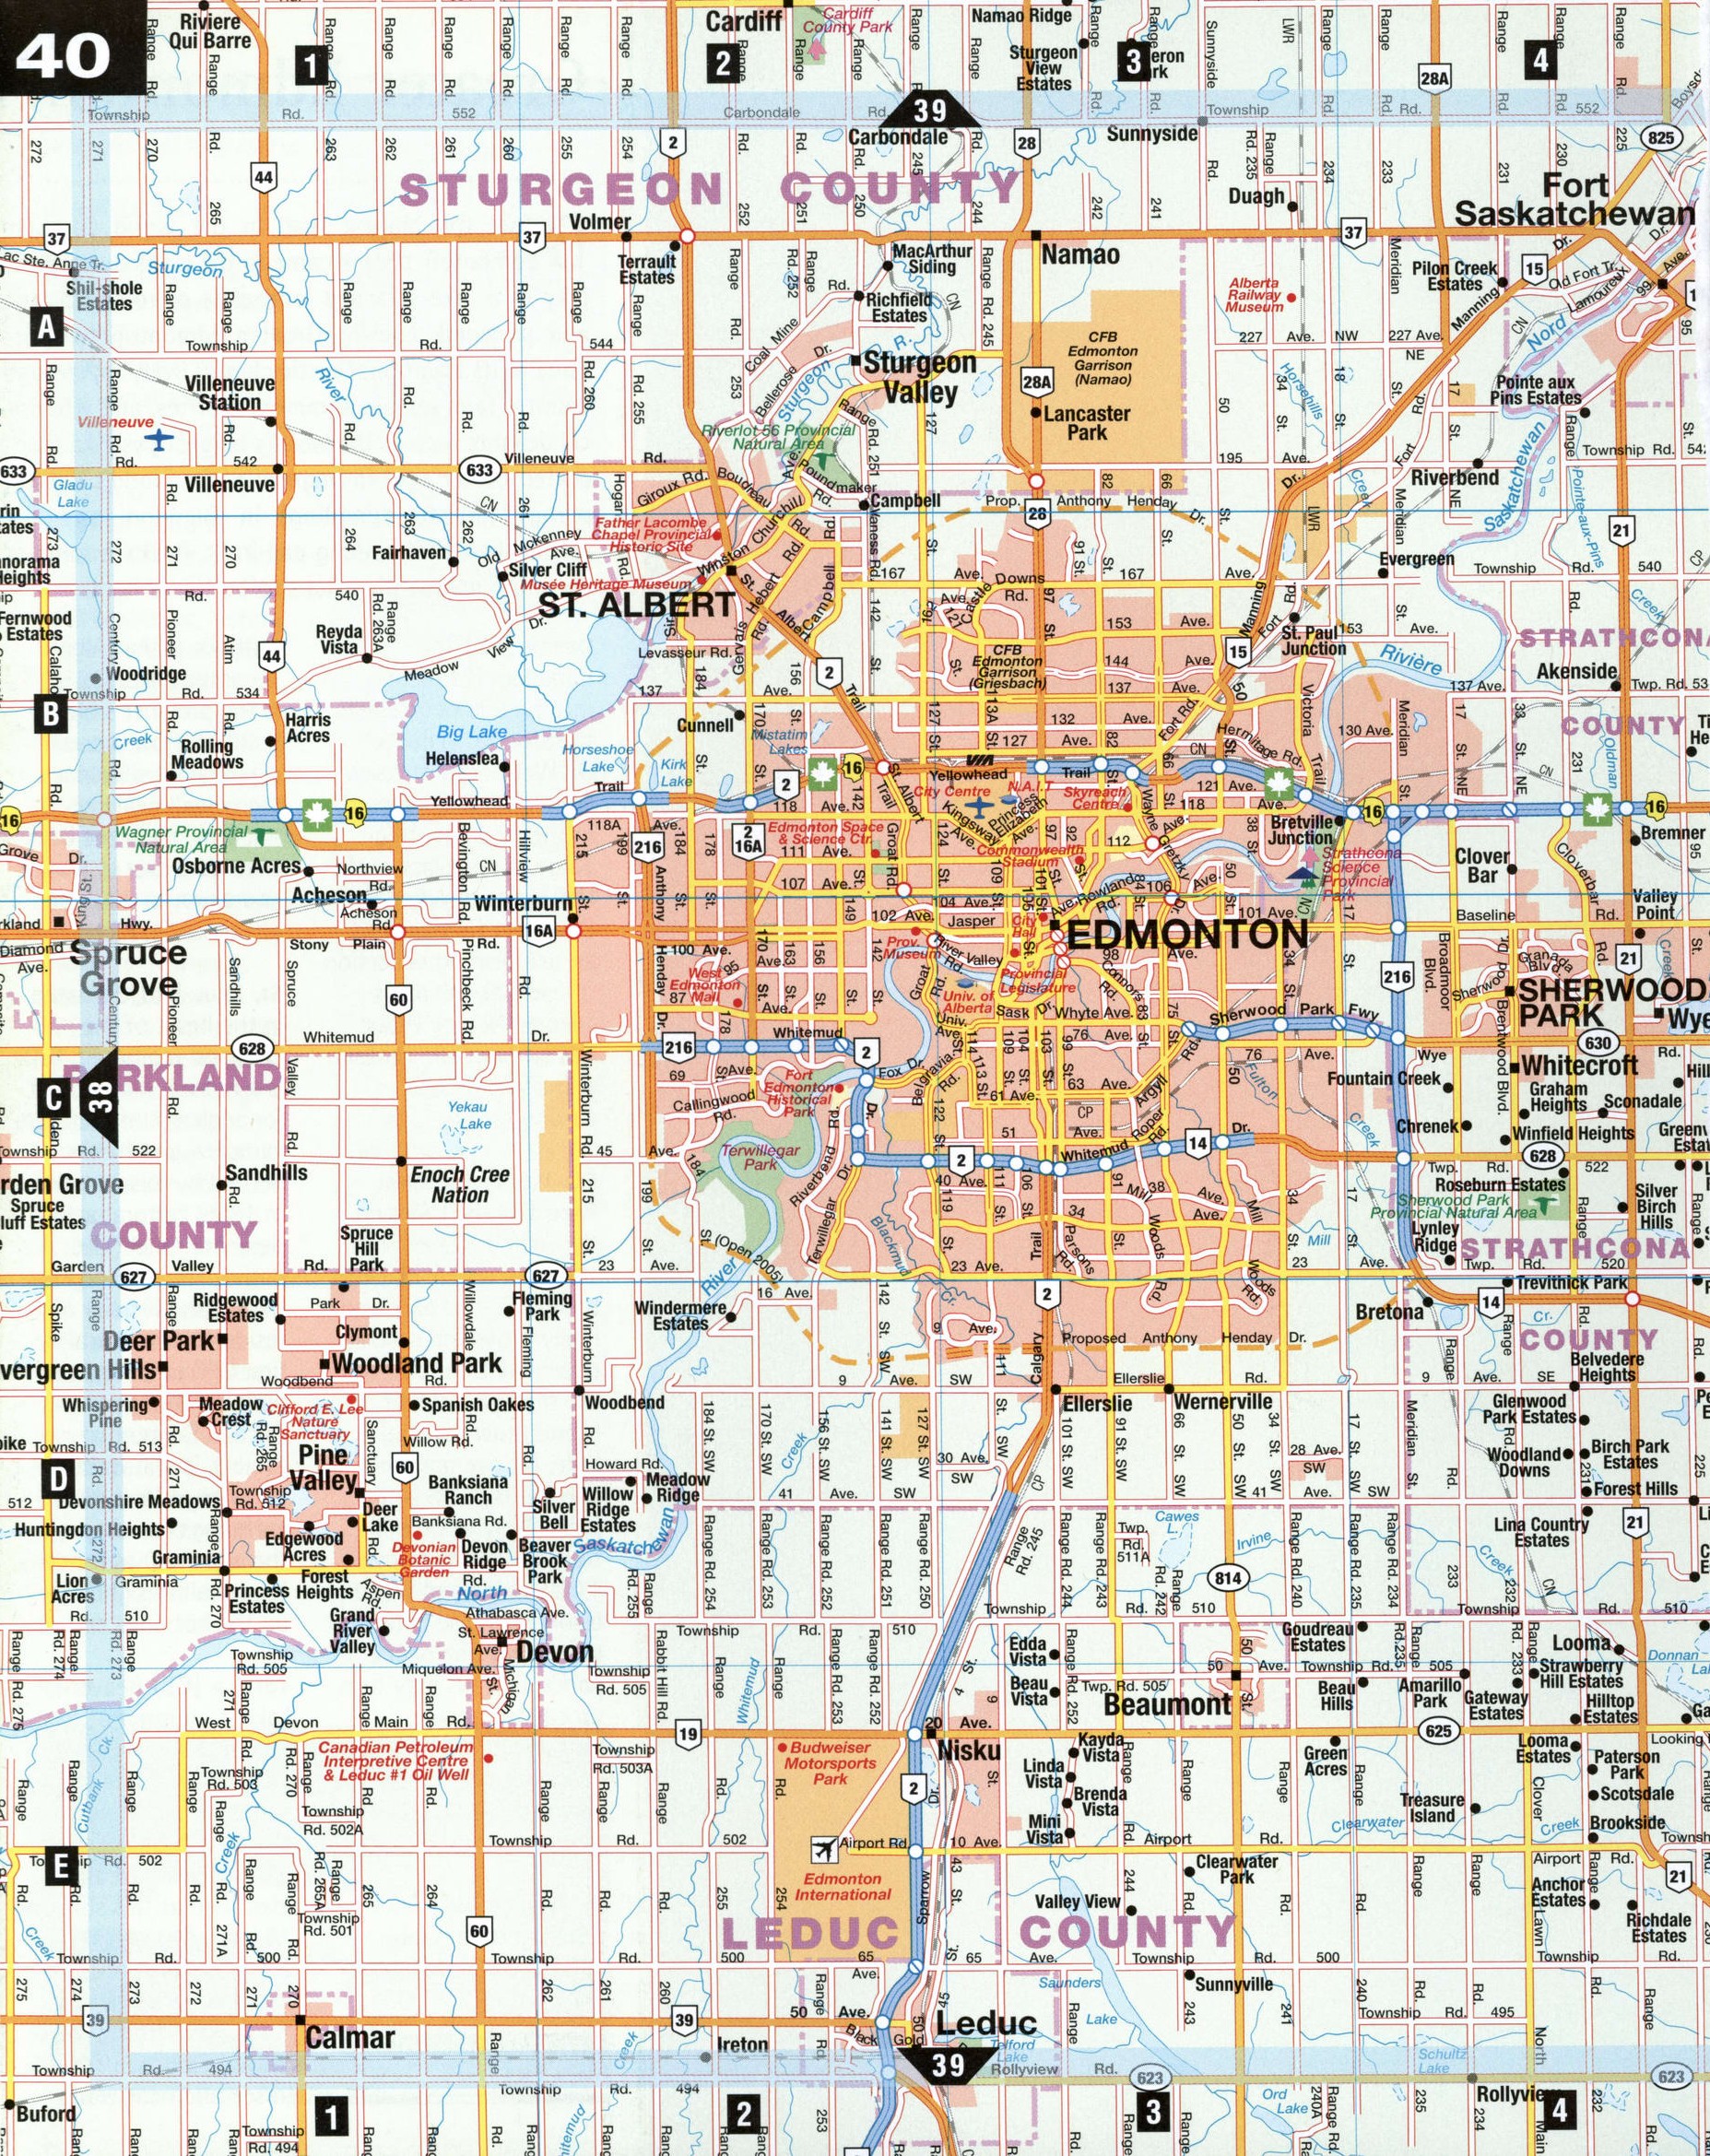 Edmonton AB suburbs map